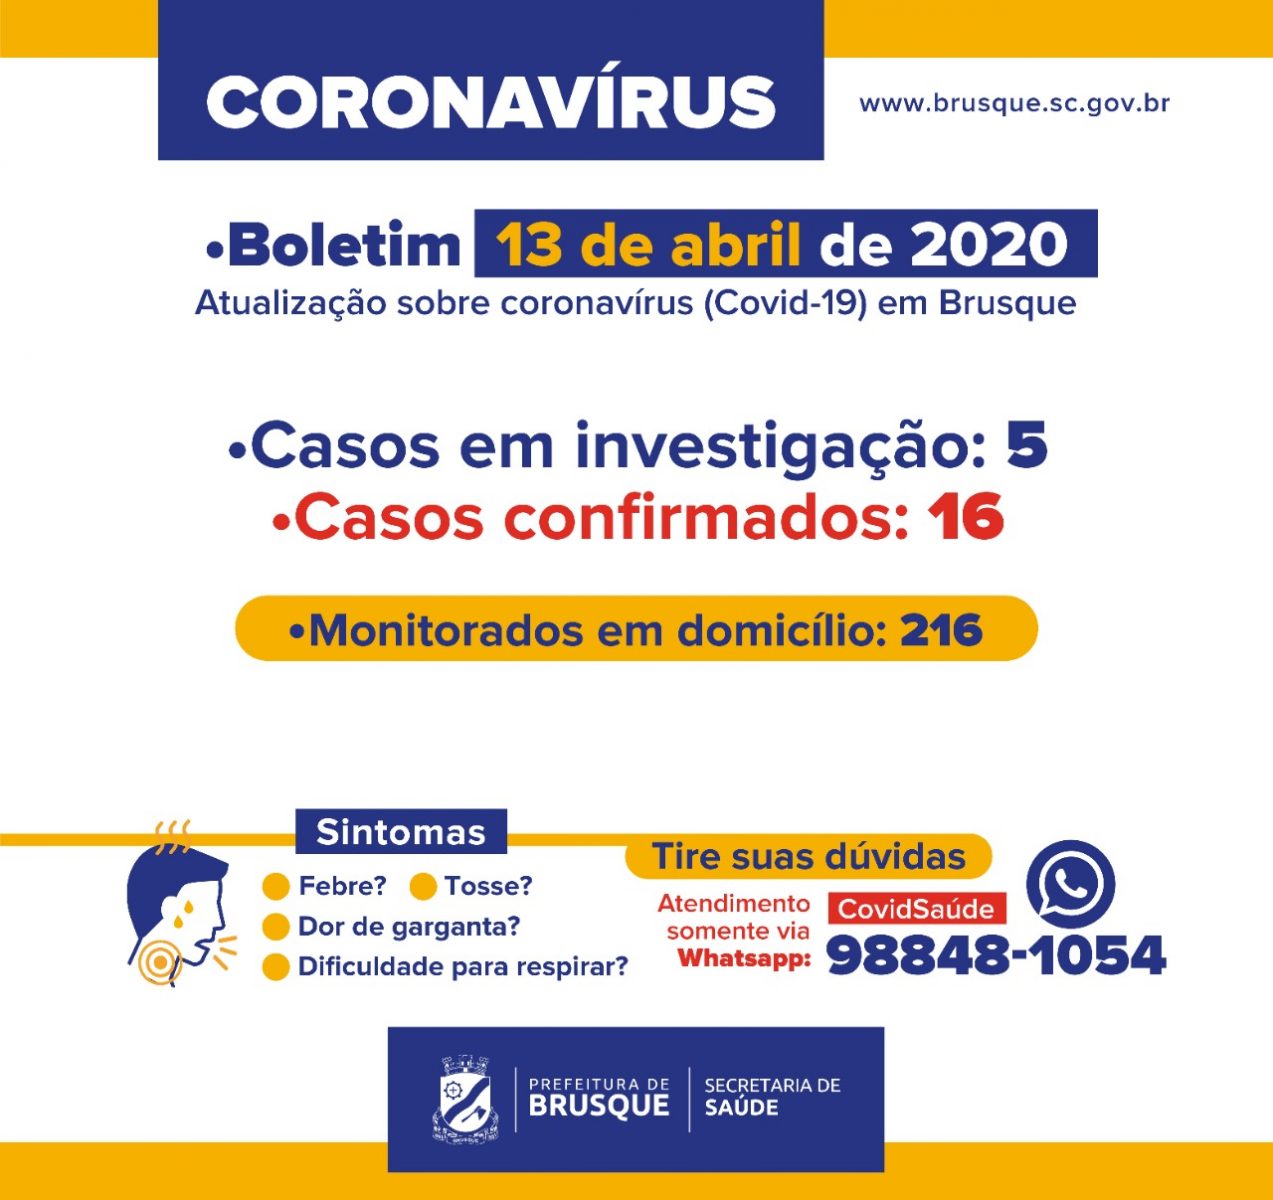 Brusque continua com 16 casos confirmados de coronavírus (Covid-19)